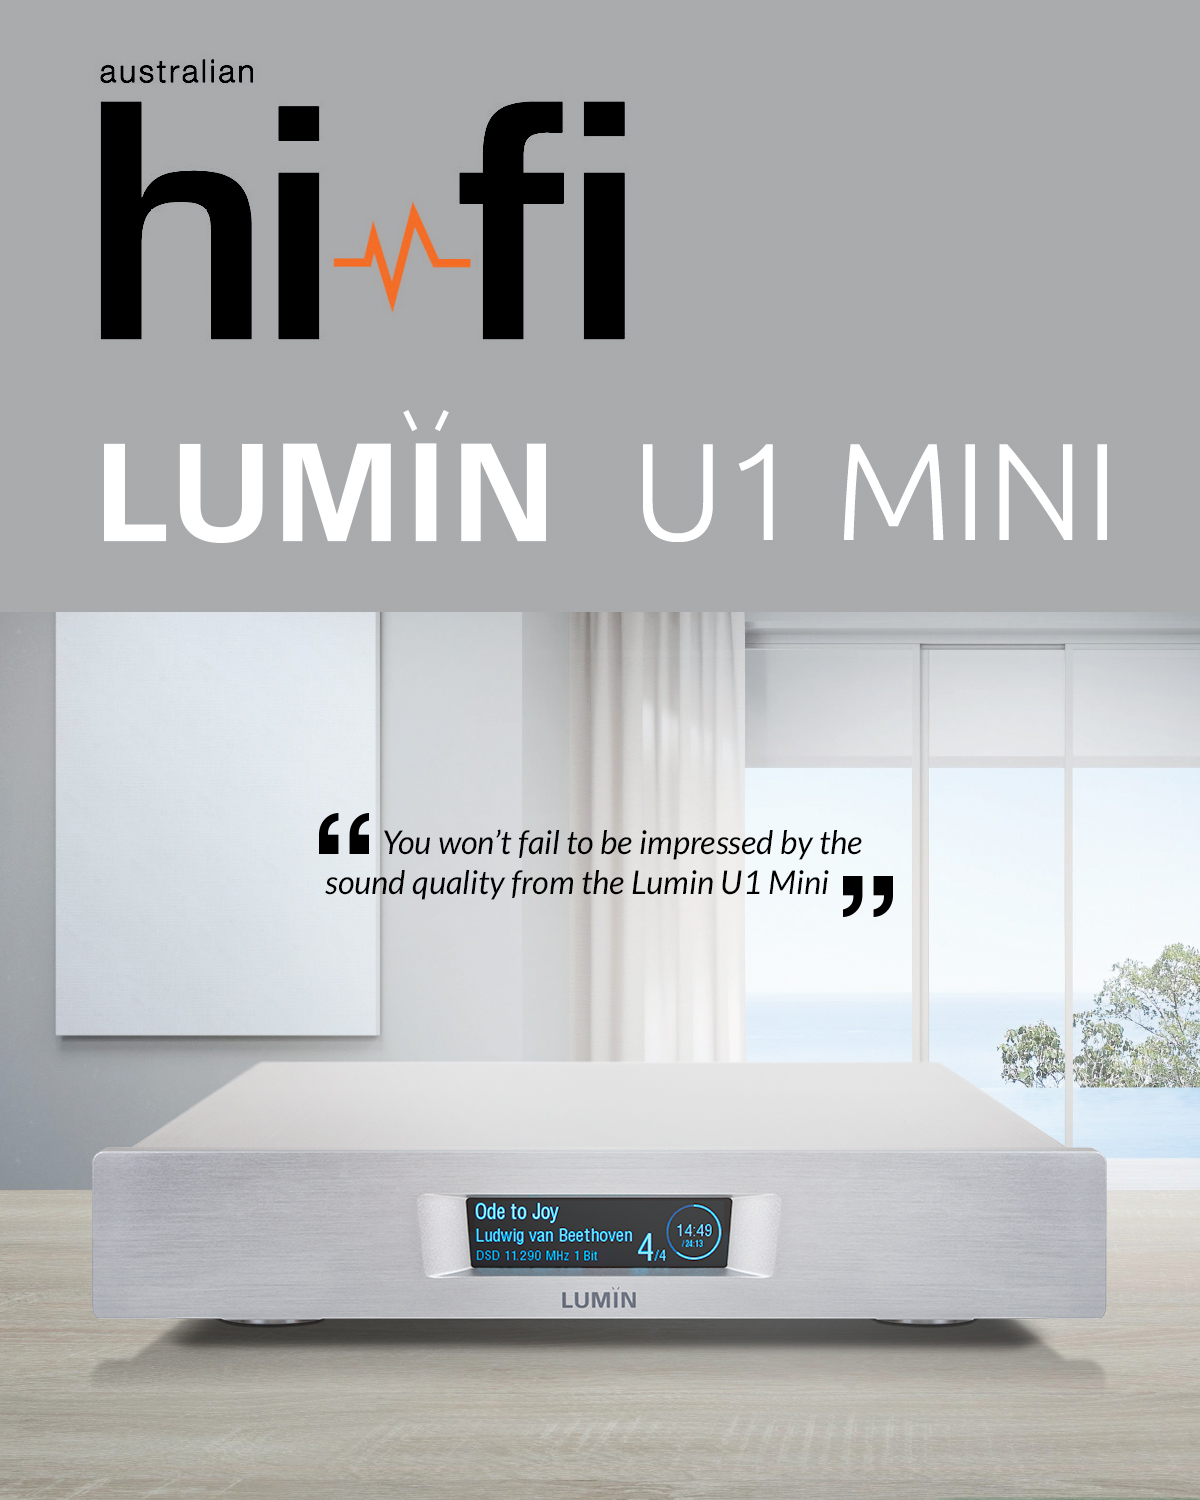 Australian Hi-Fi Magazine LUMIN U1 Mini Review